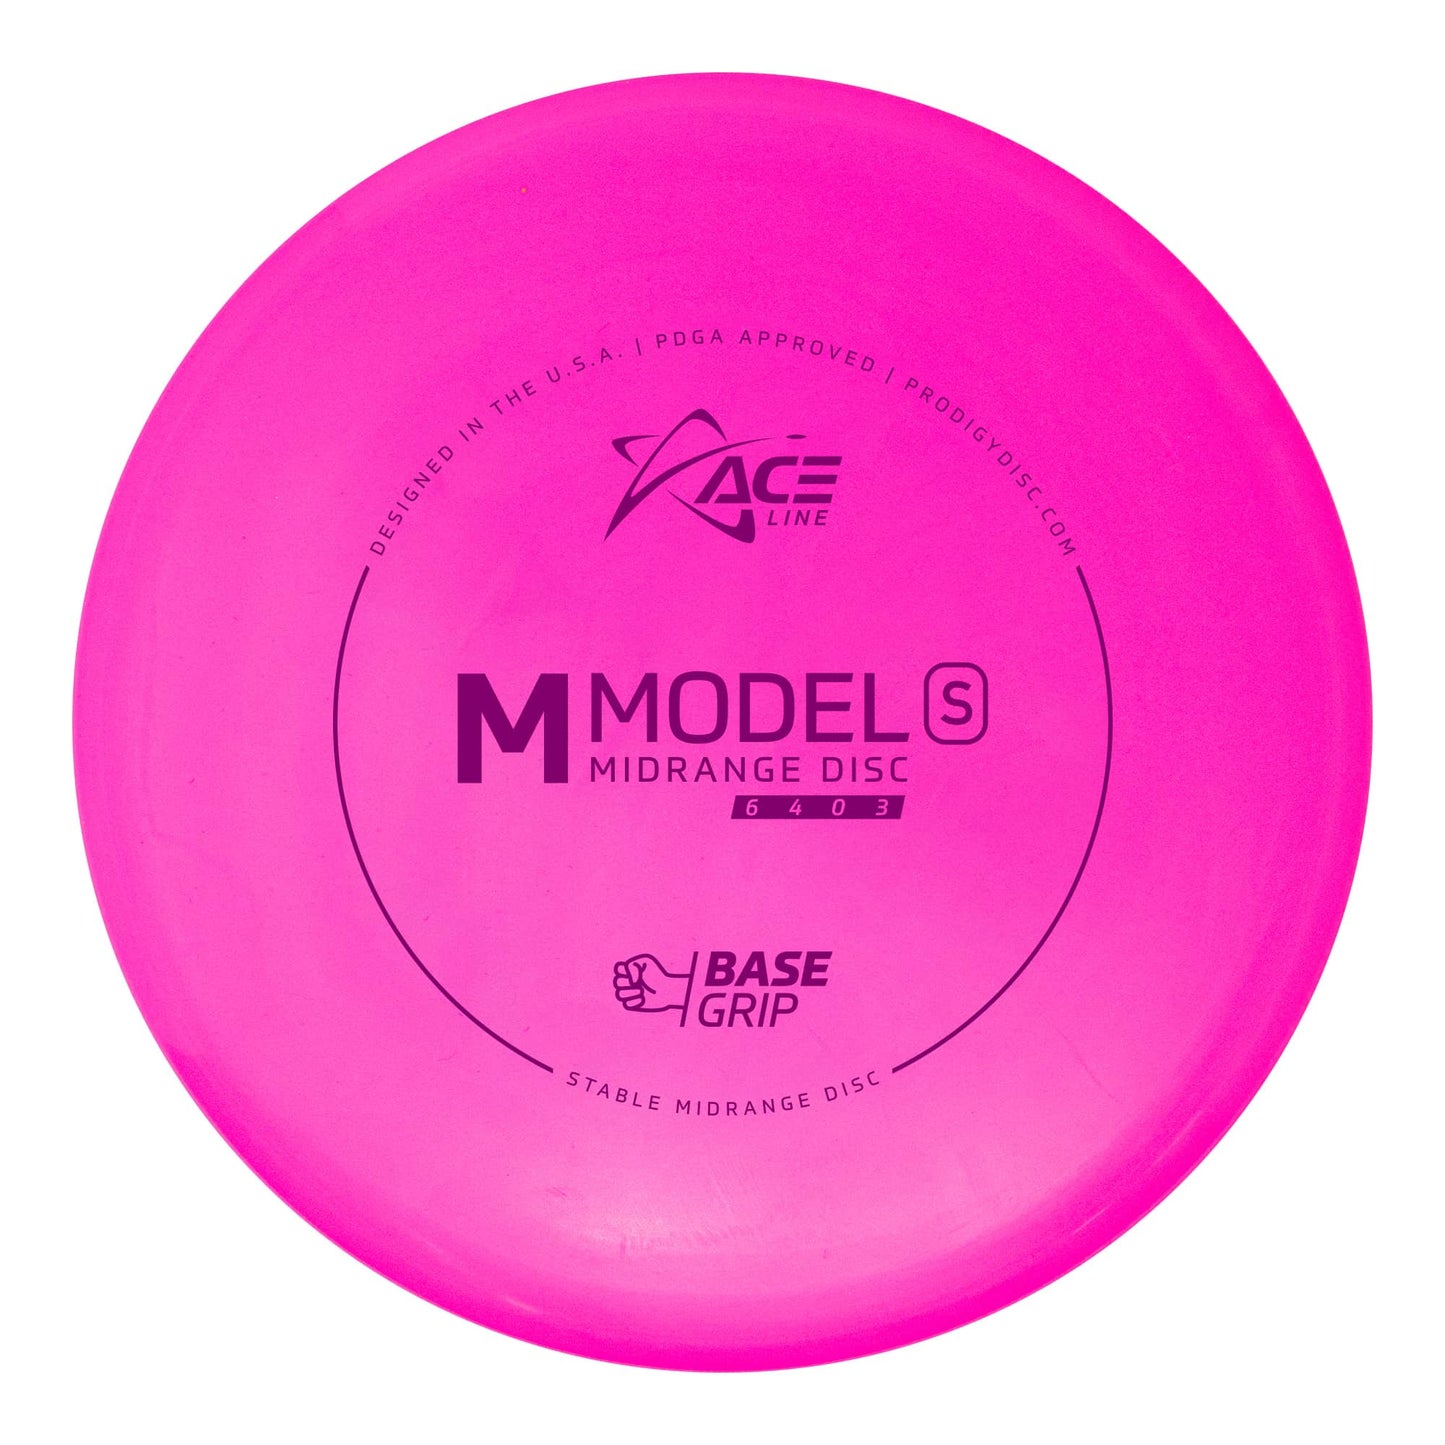 Prodigy Ace Line M Model S Midrange Disc - Basegrip Plastic